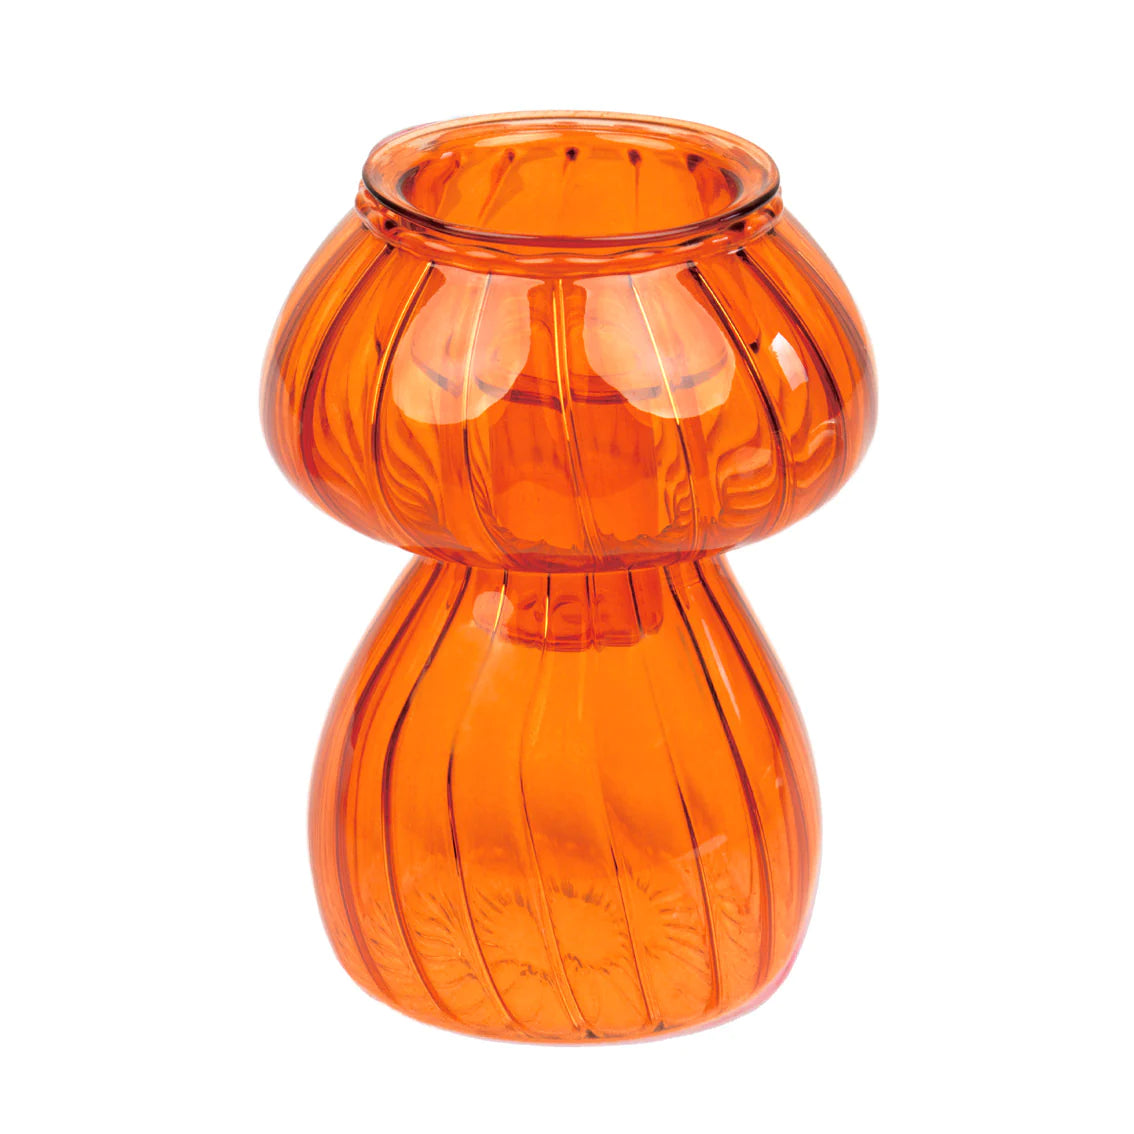 Mushroom shaped glass candle in bright orange.